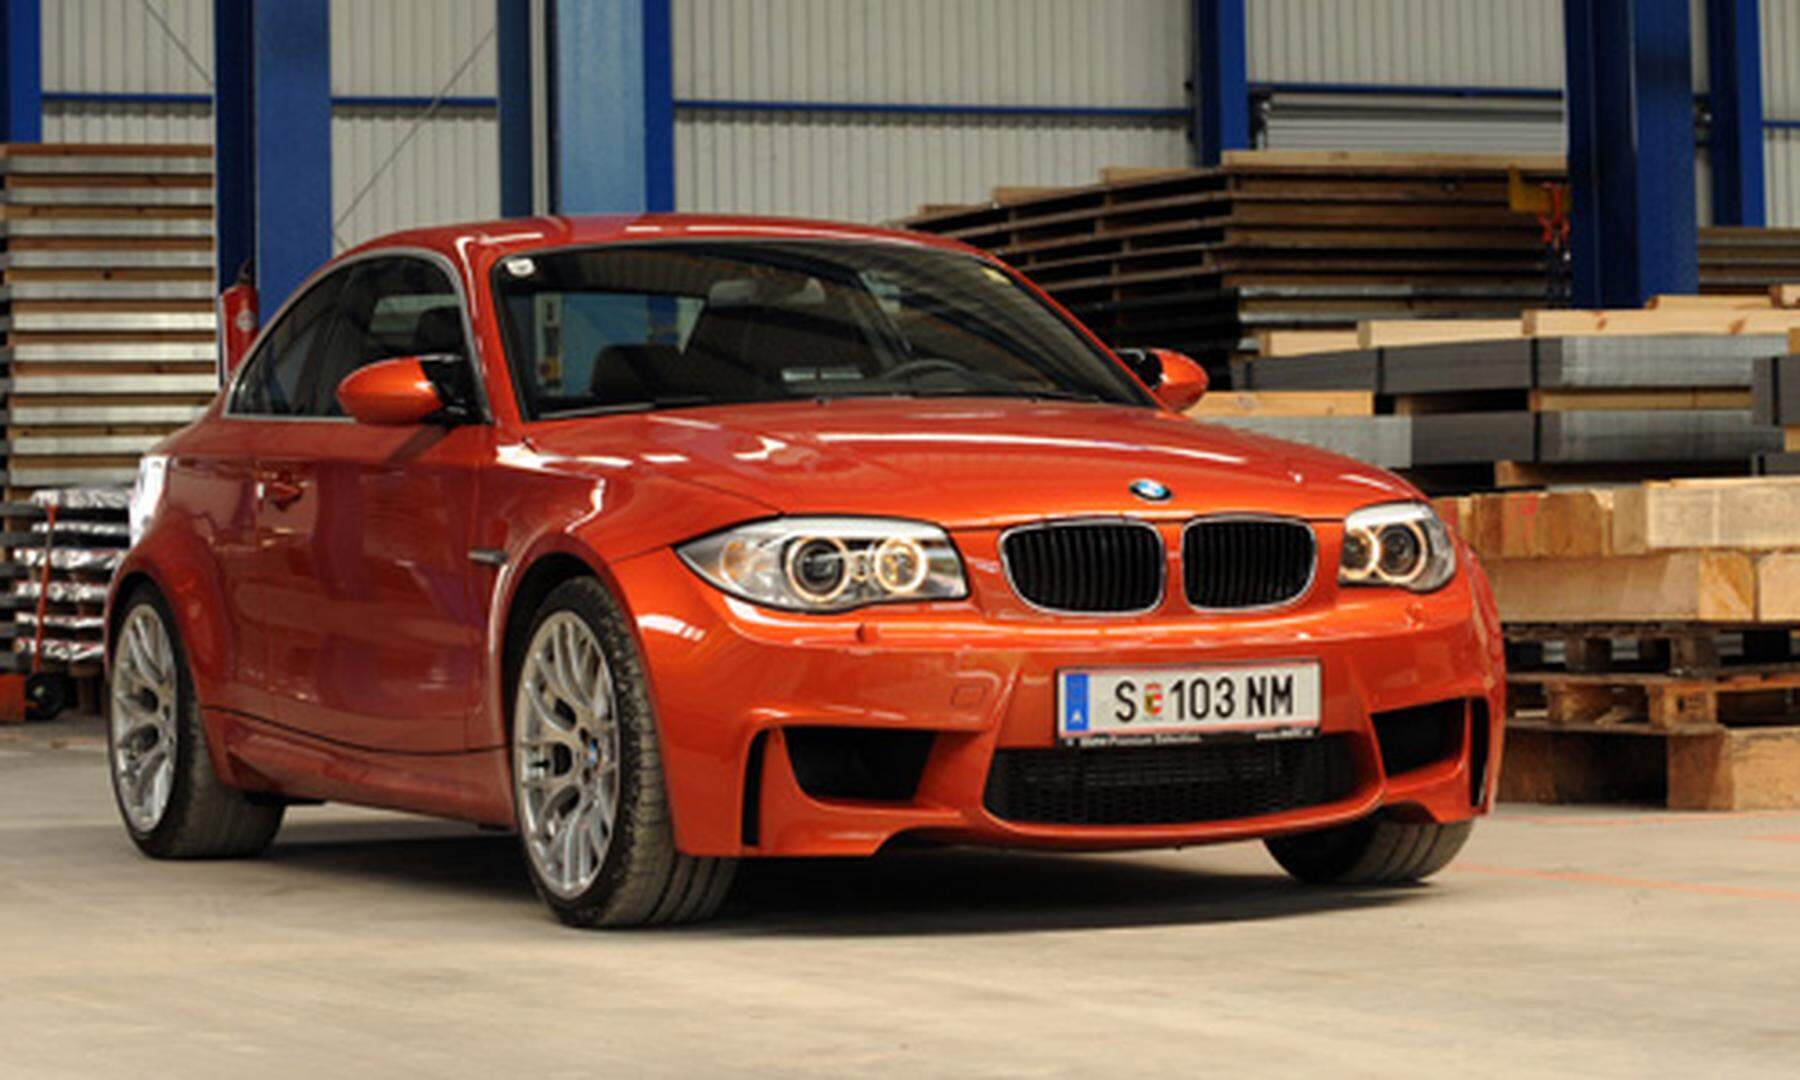 BMW 1er M Coupé Youngtimer Klassiker Potenzial! (verkauft)